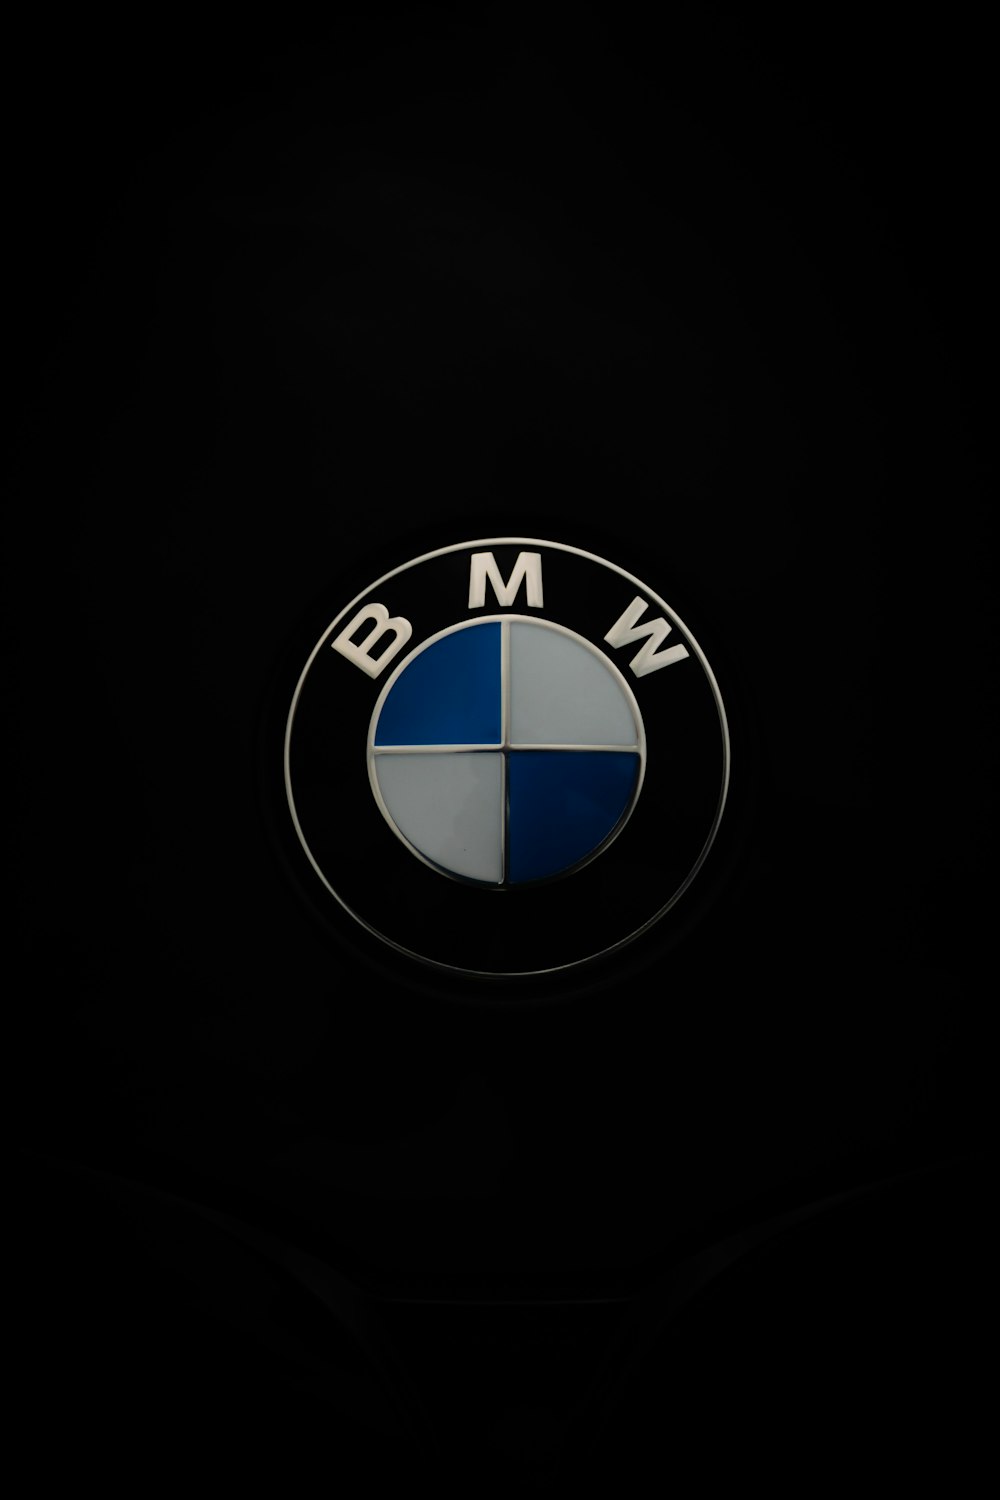 1000 Bmw Logo Pictures Download Free Images On Unsplash